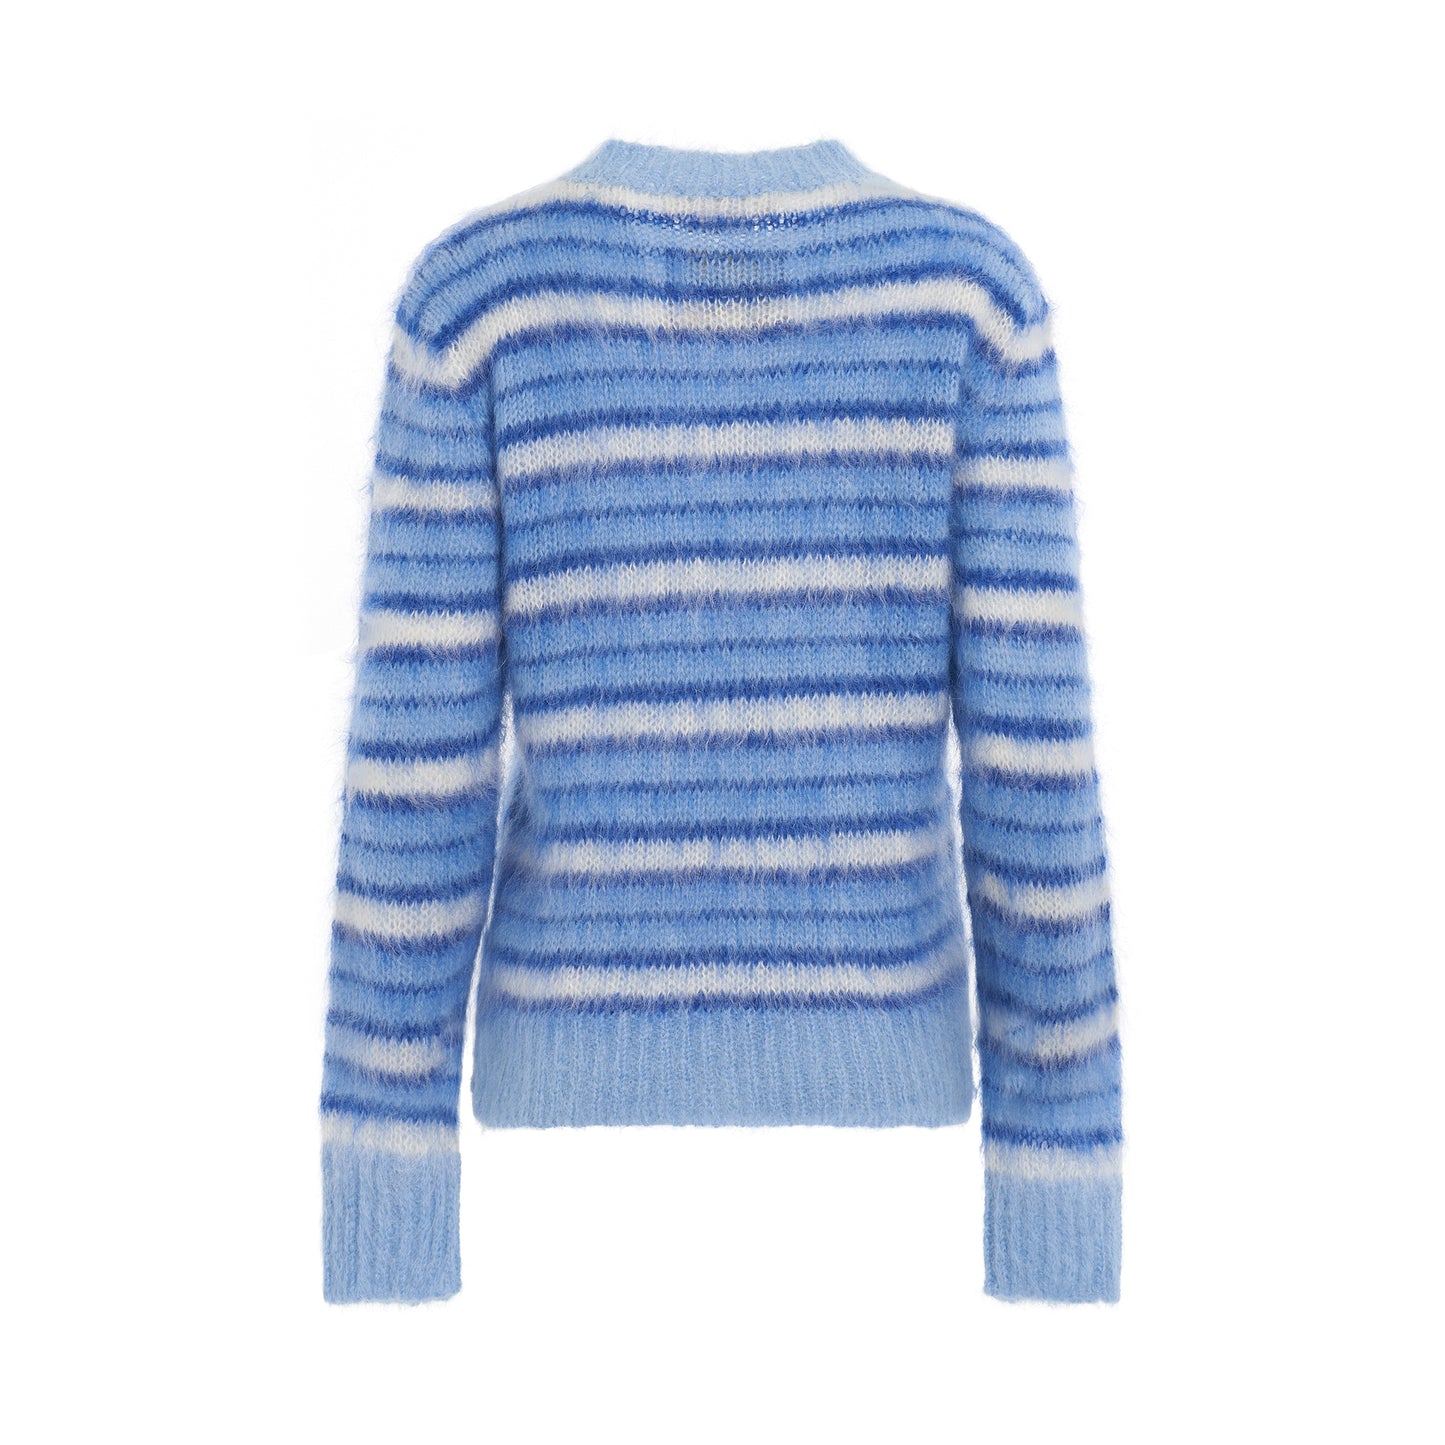 Striped Roundneck Sweater in Iris Blue